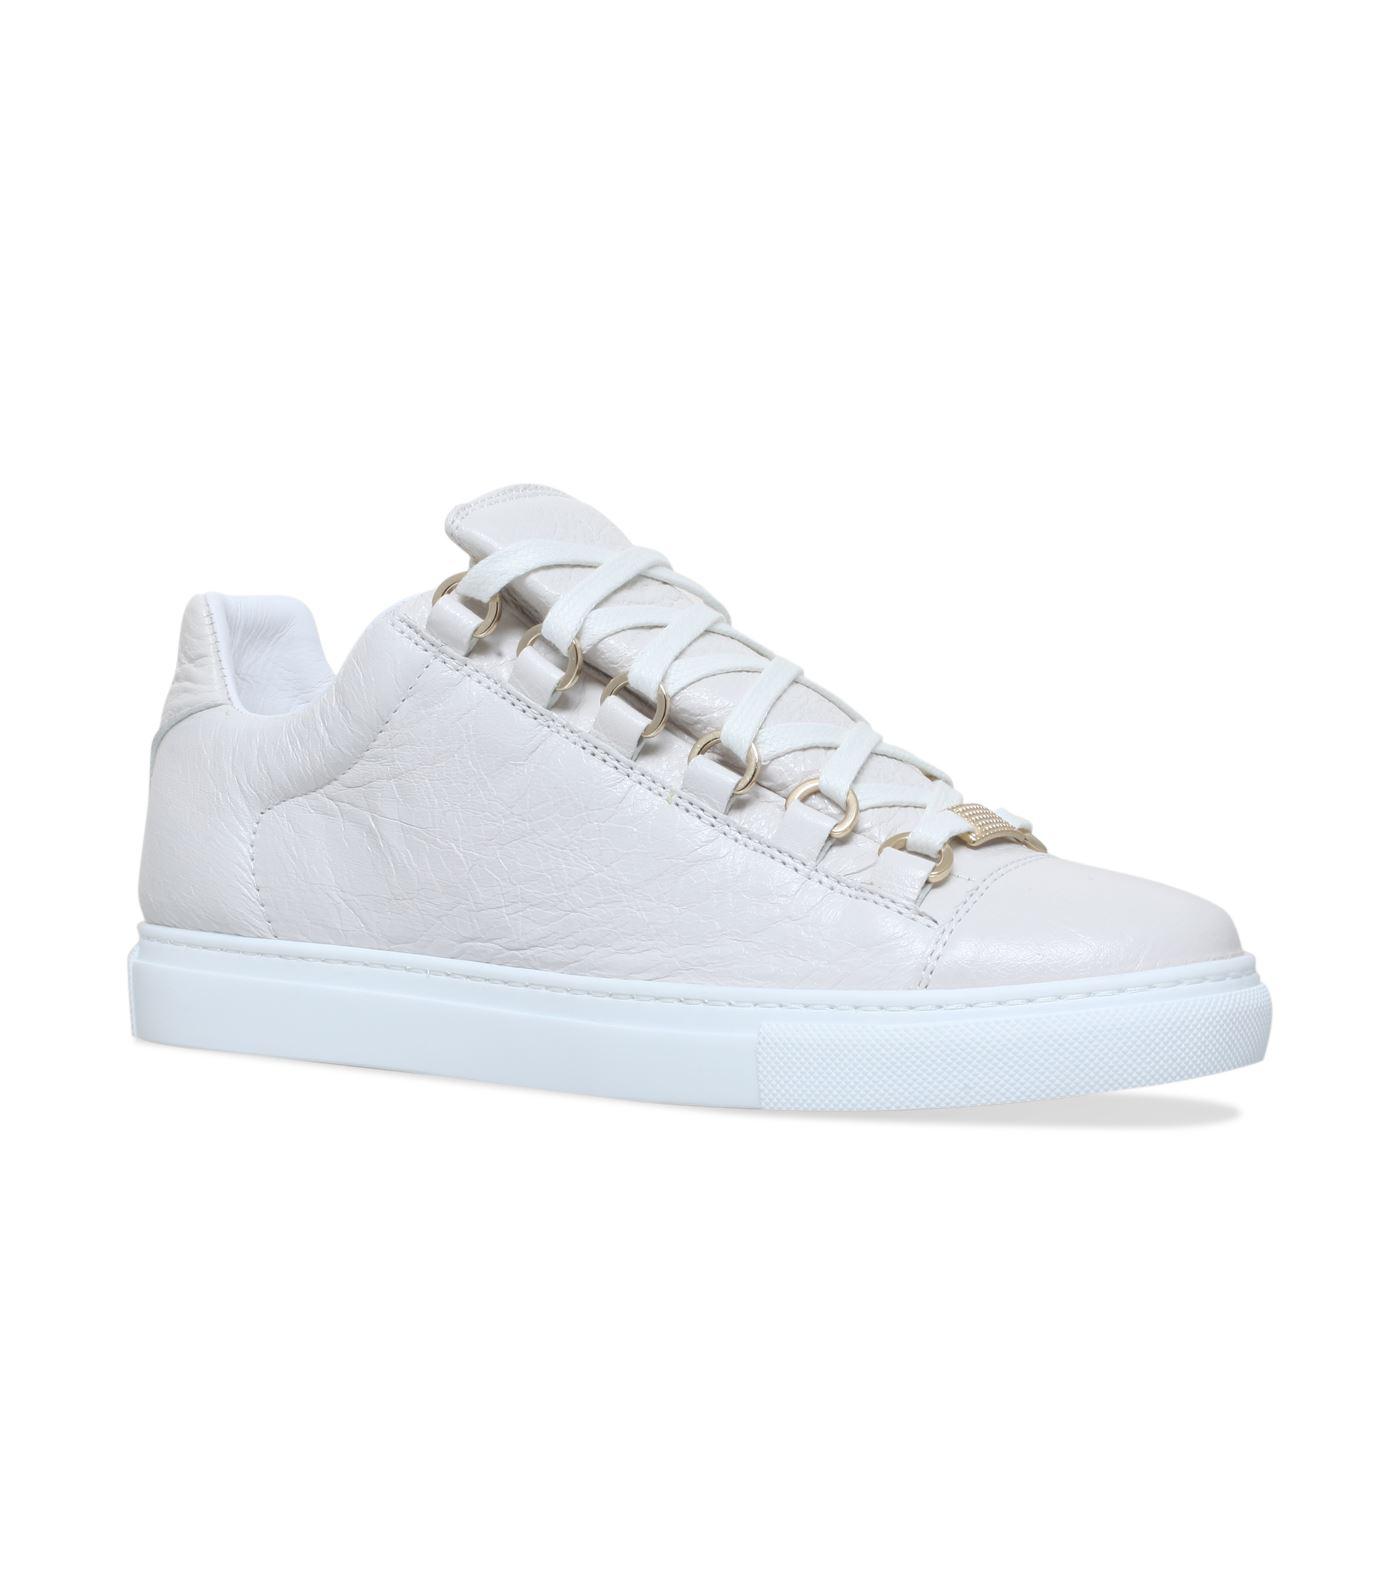 Balenciaga White Leather Arena Low Top Sneakers Size 40